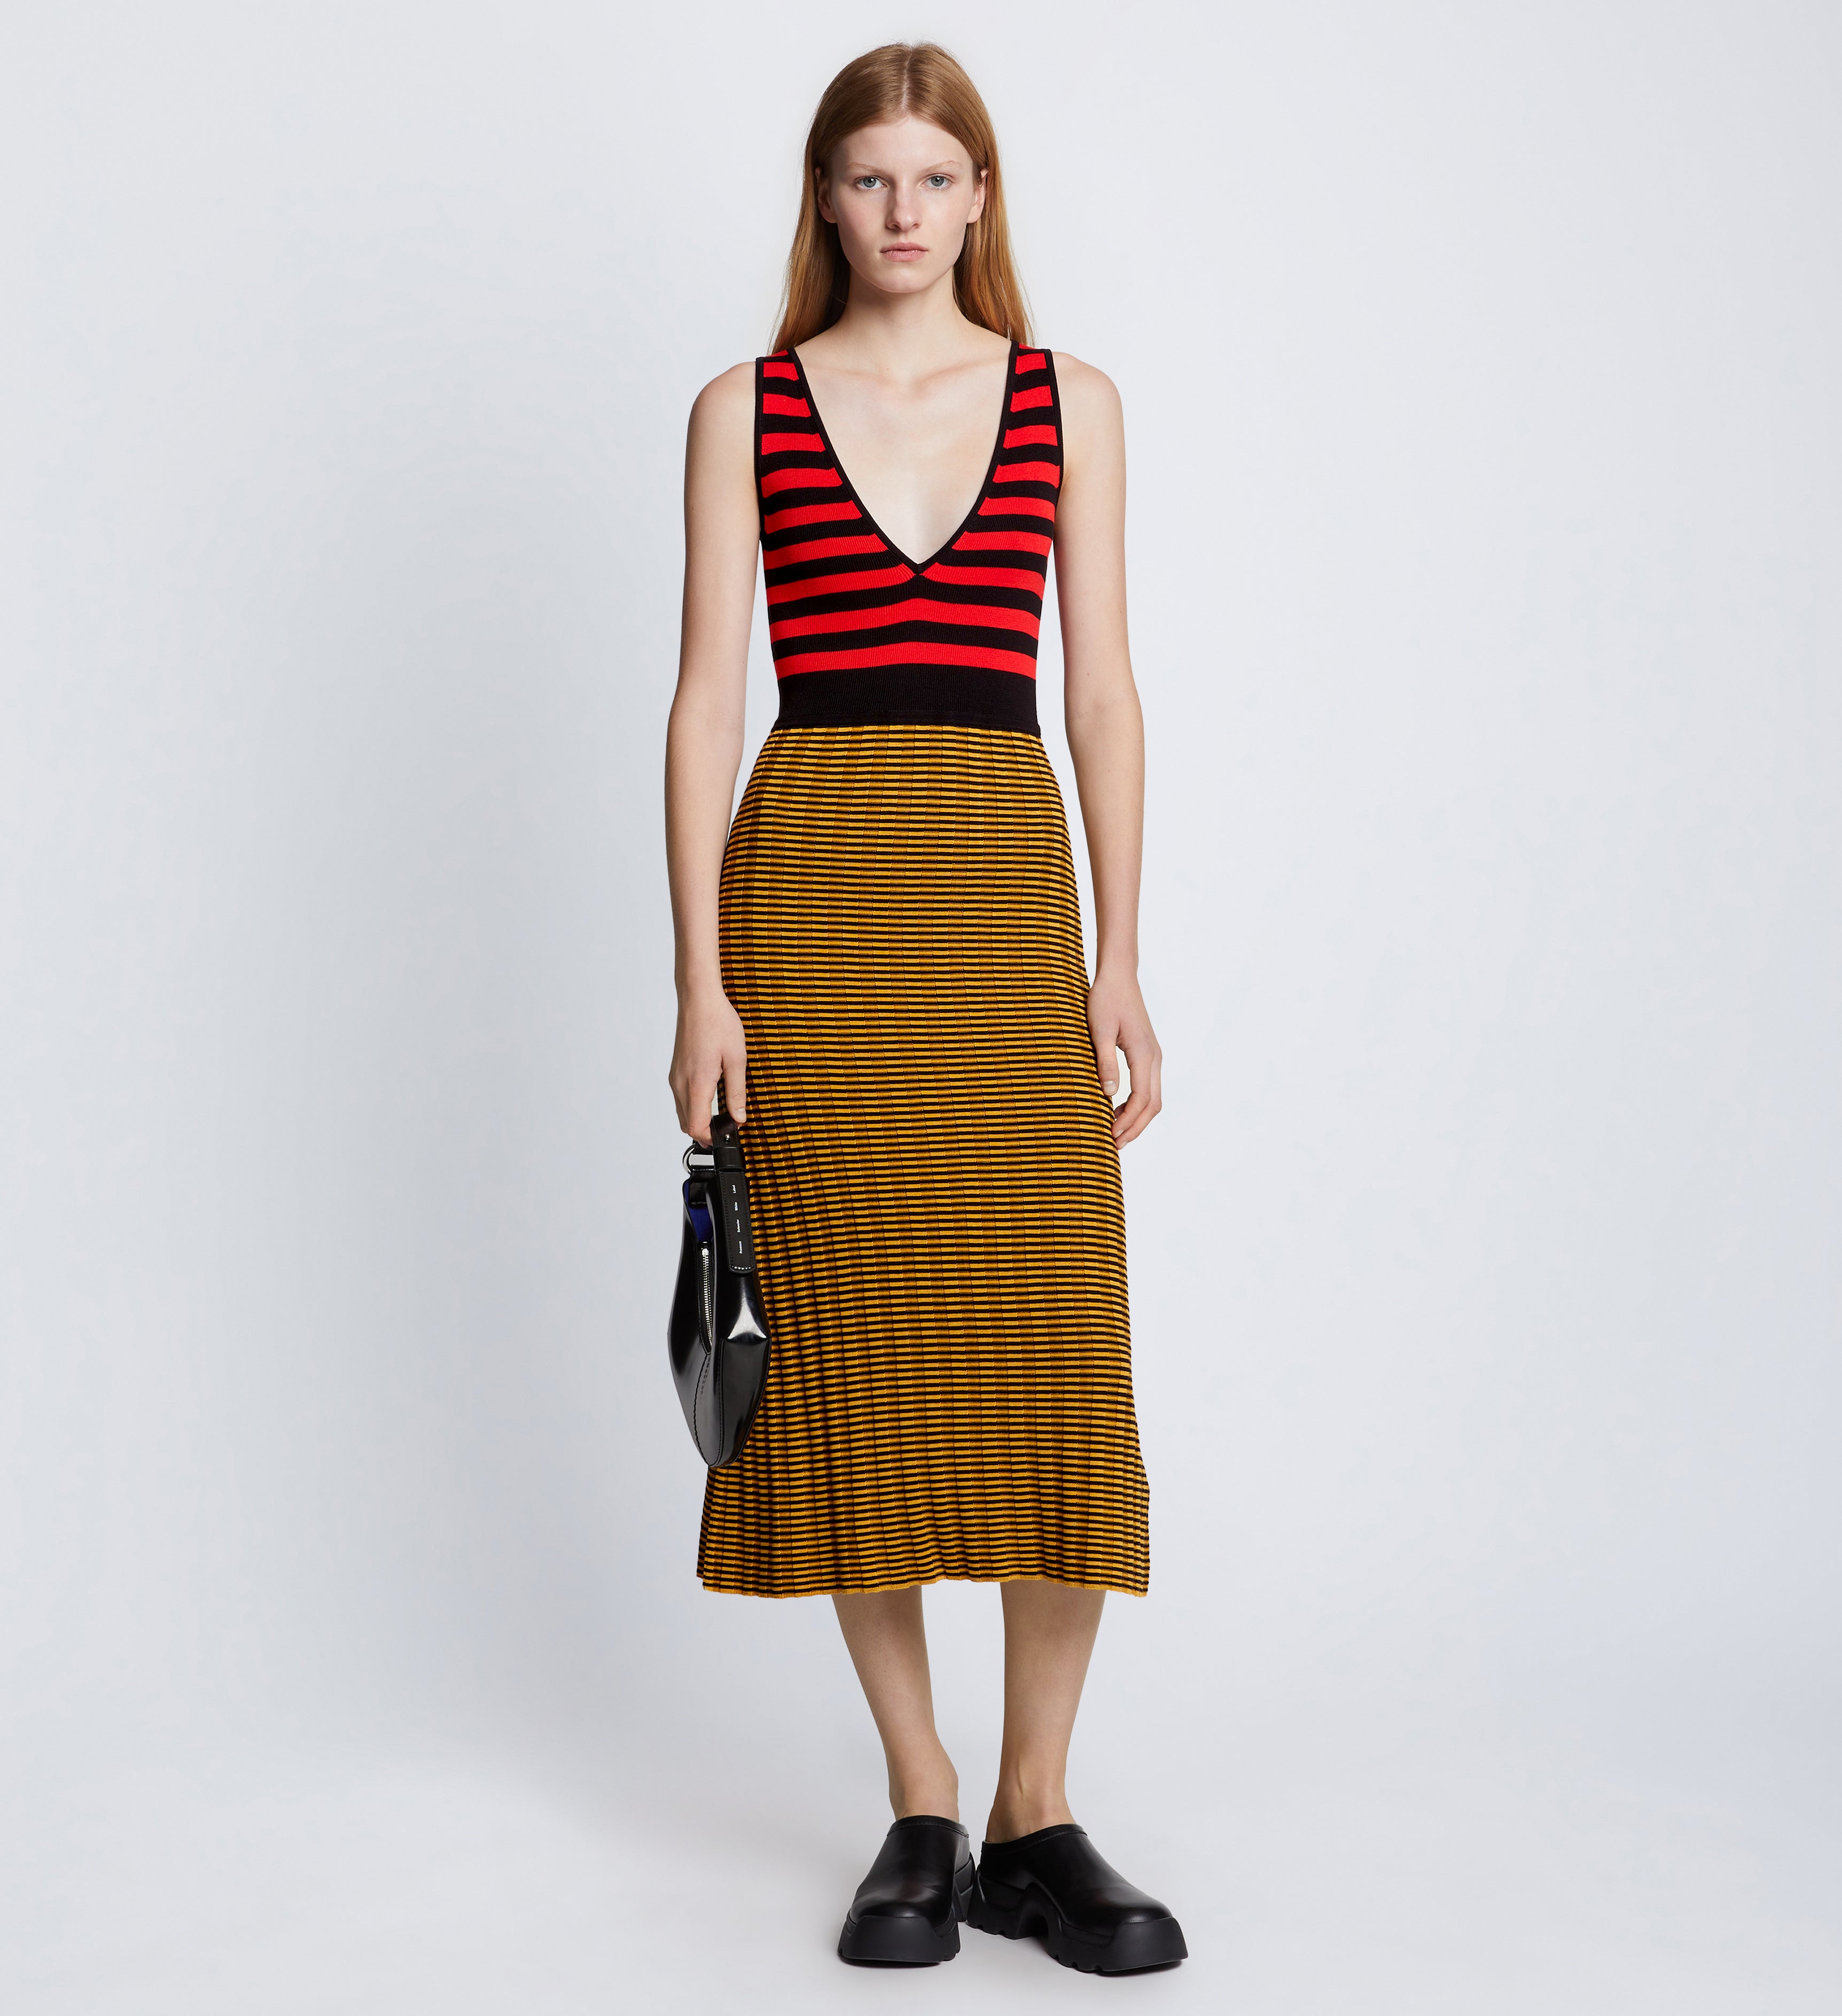 Slinky Stripe Tank Top Dress - Cherry/Golden Rod/Black